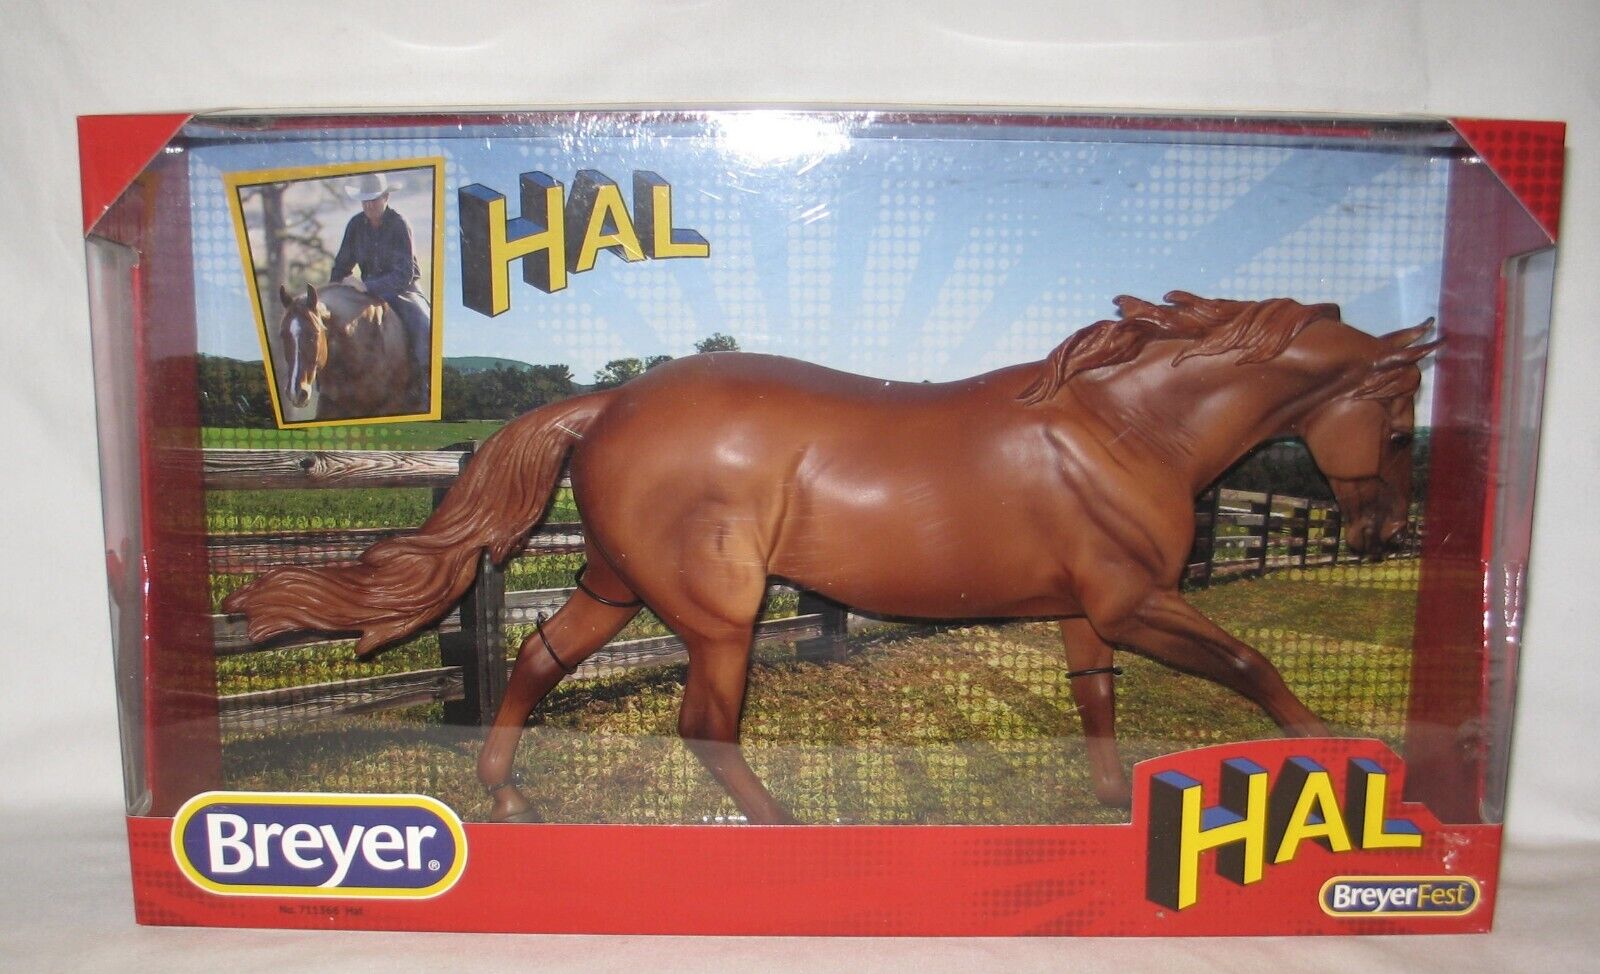 Breyer horse breyerfest Hal chestnut QH stock dundee mold special run